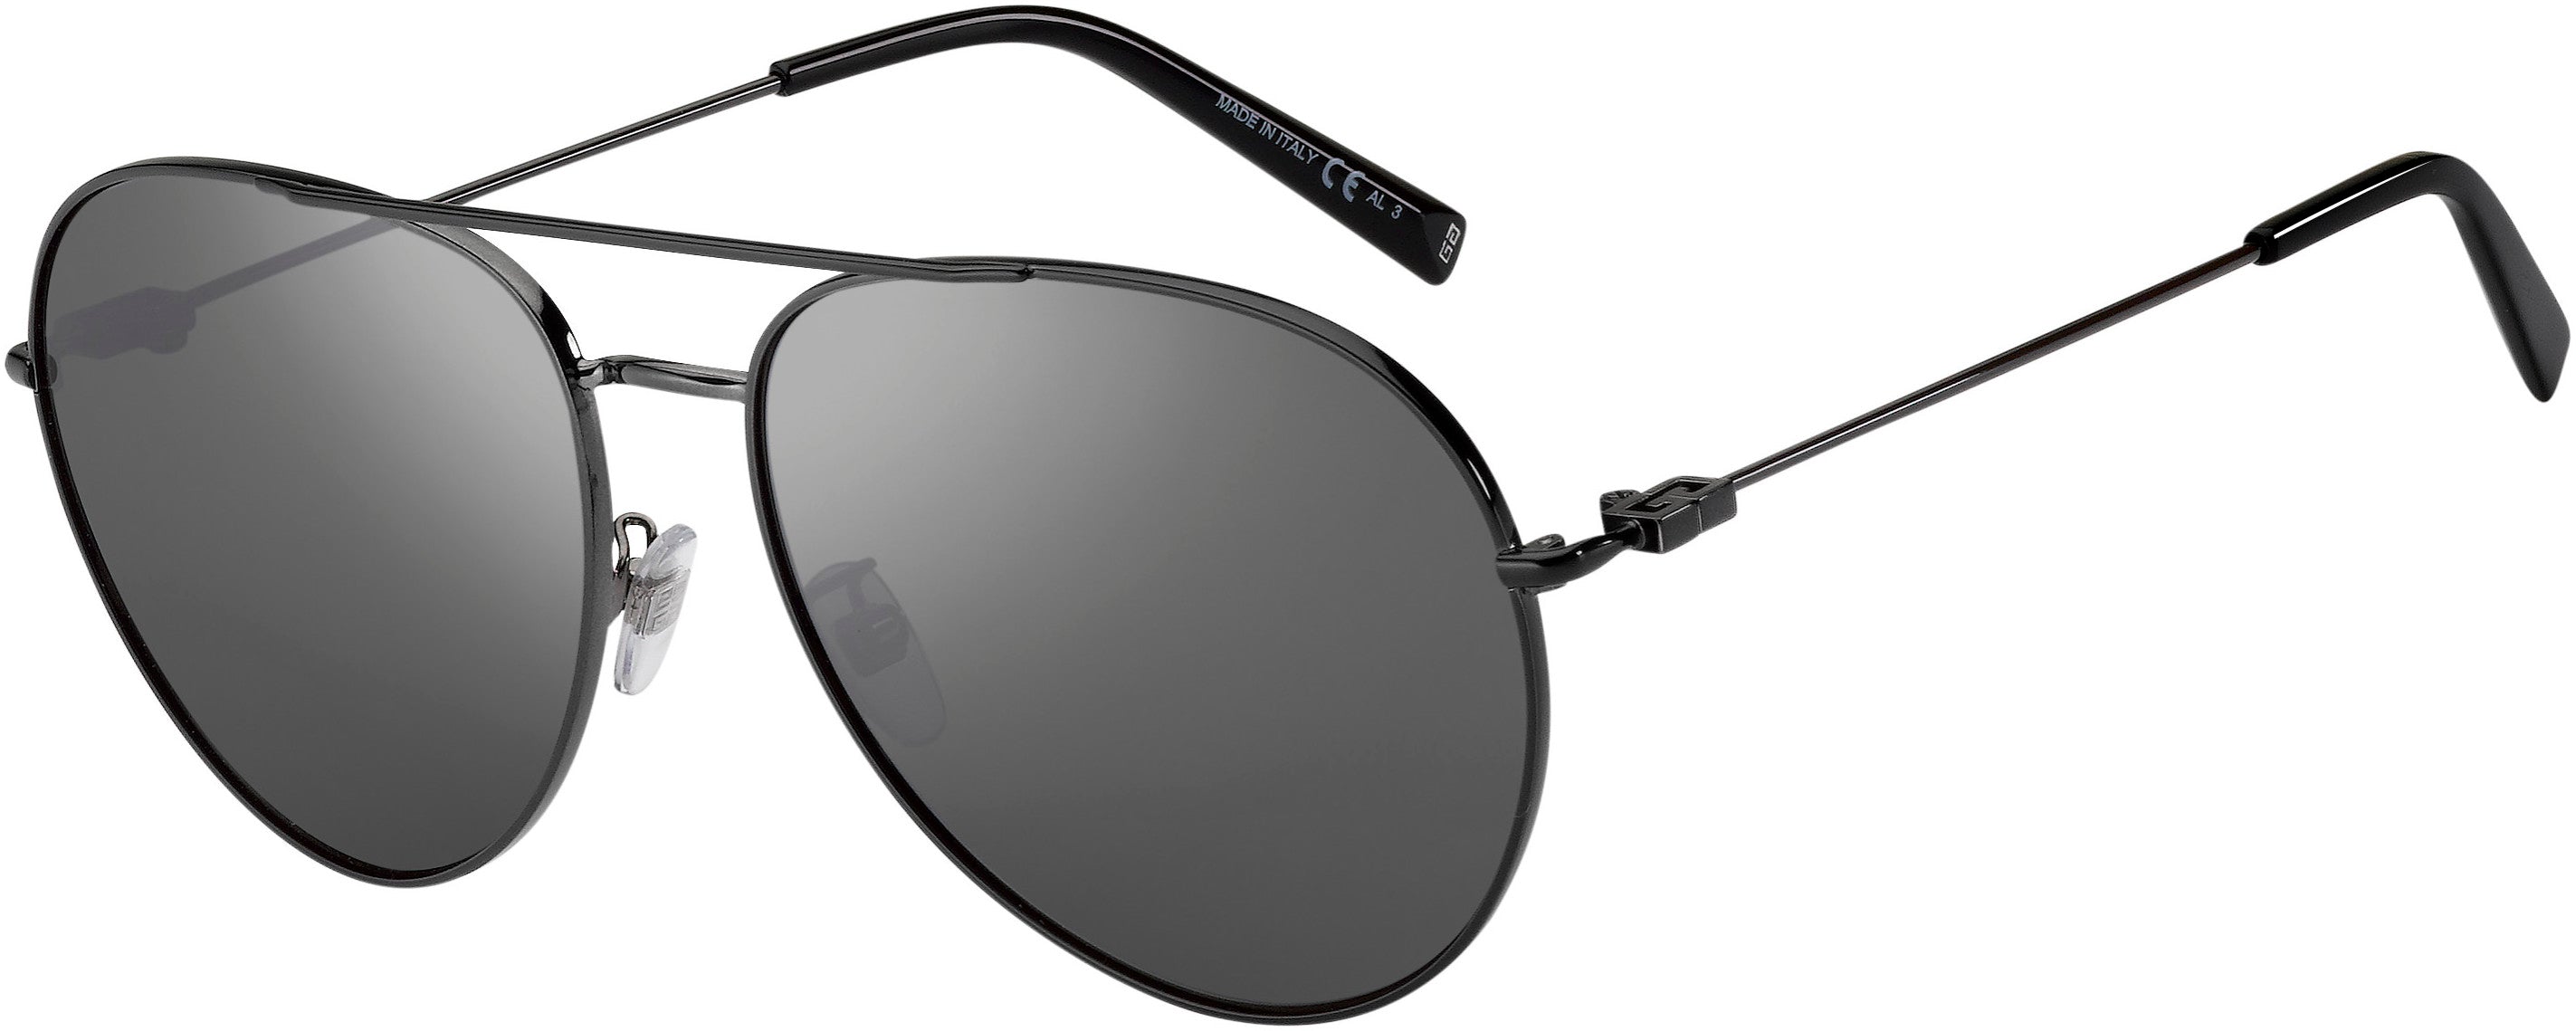  Givenchy 7196/G/S Aviator Sunglasses 0V81-0V81  Dark Ruthenium Black (T4 Silver Mirror)